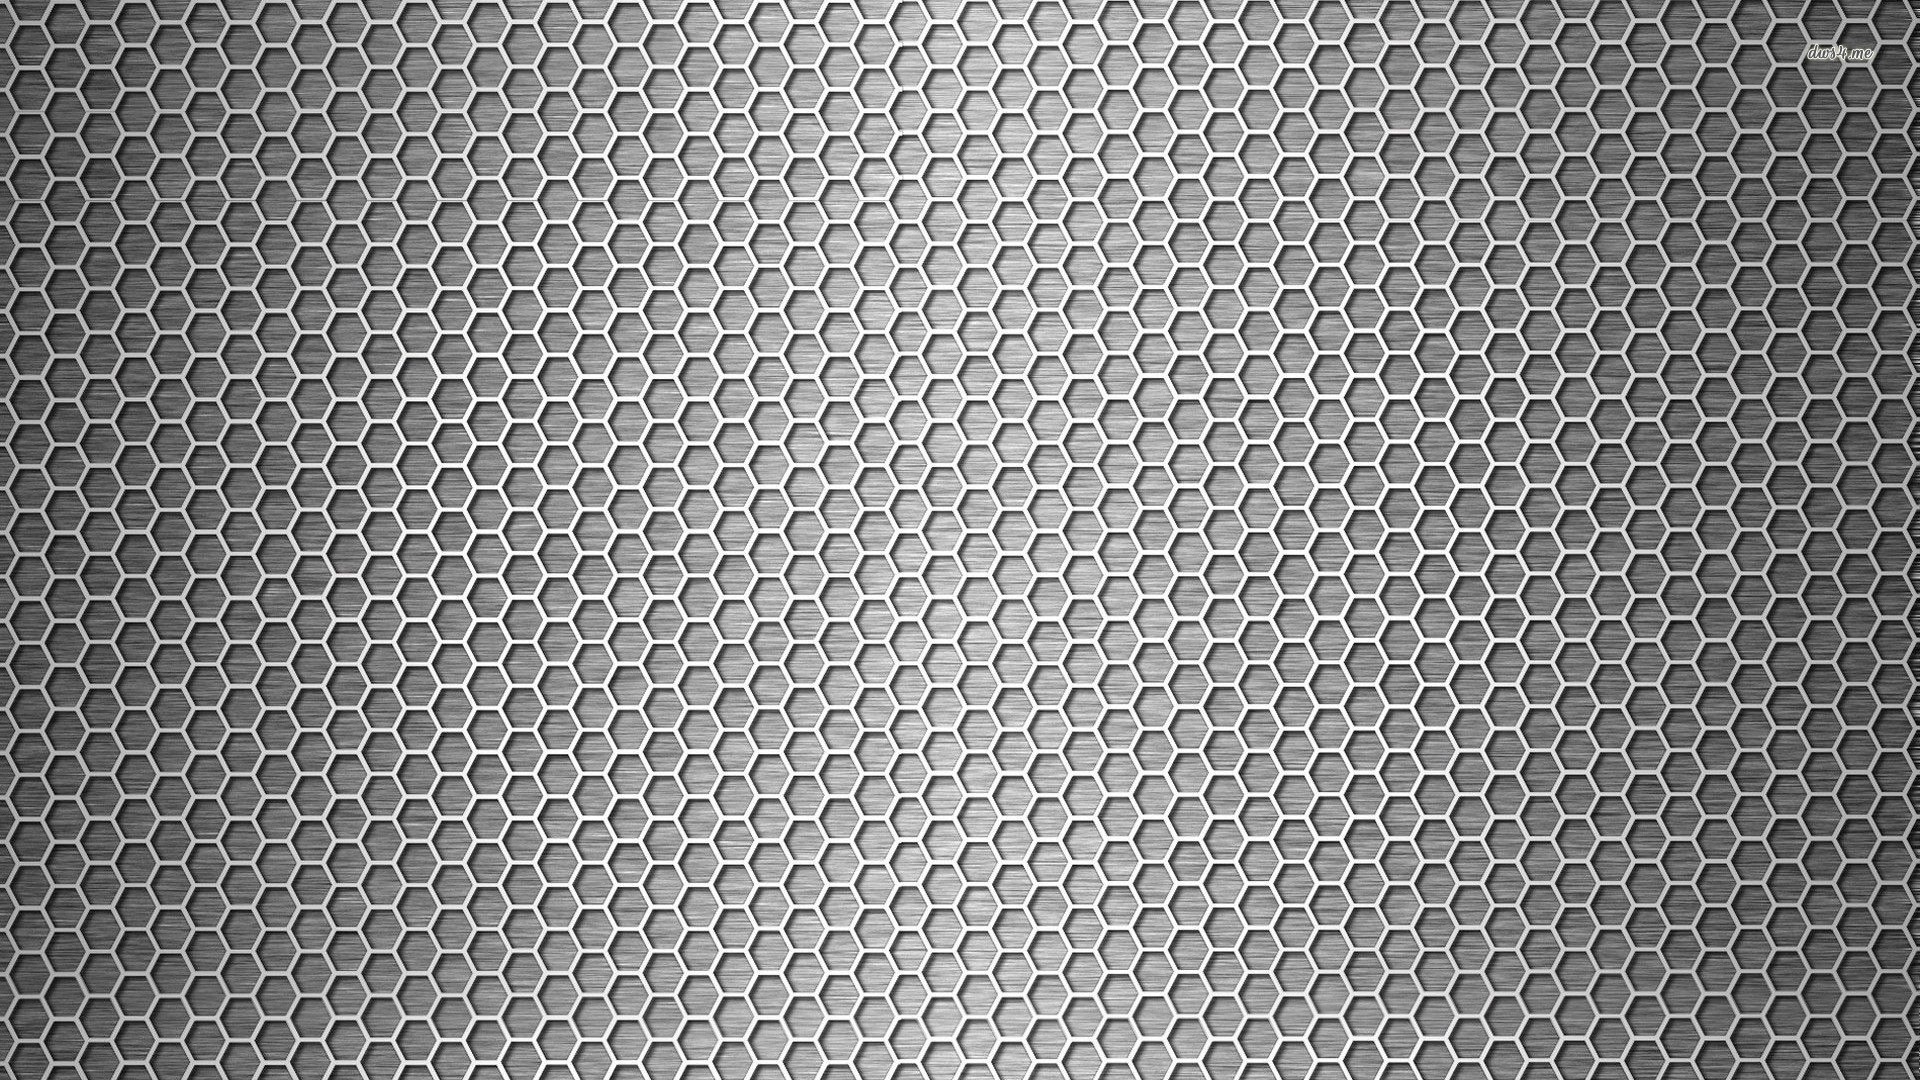 1920x1080 Title : carbon fiber wallpaper (24) Dimension : 1920 x 1080. File Type :  JPG/JPEG